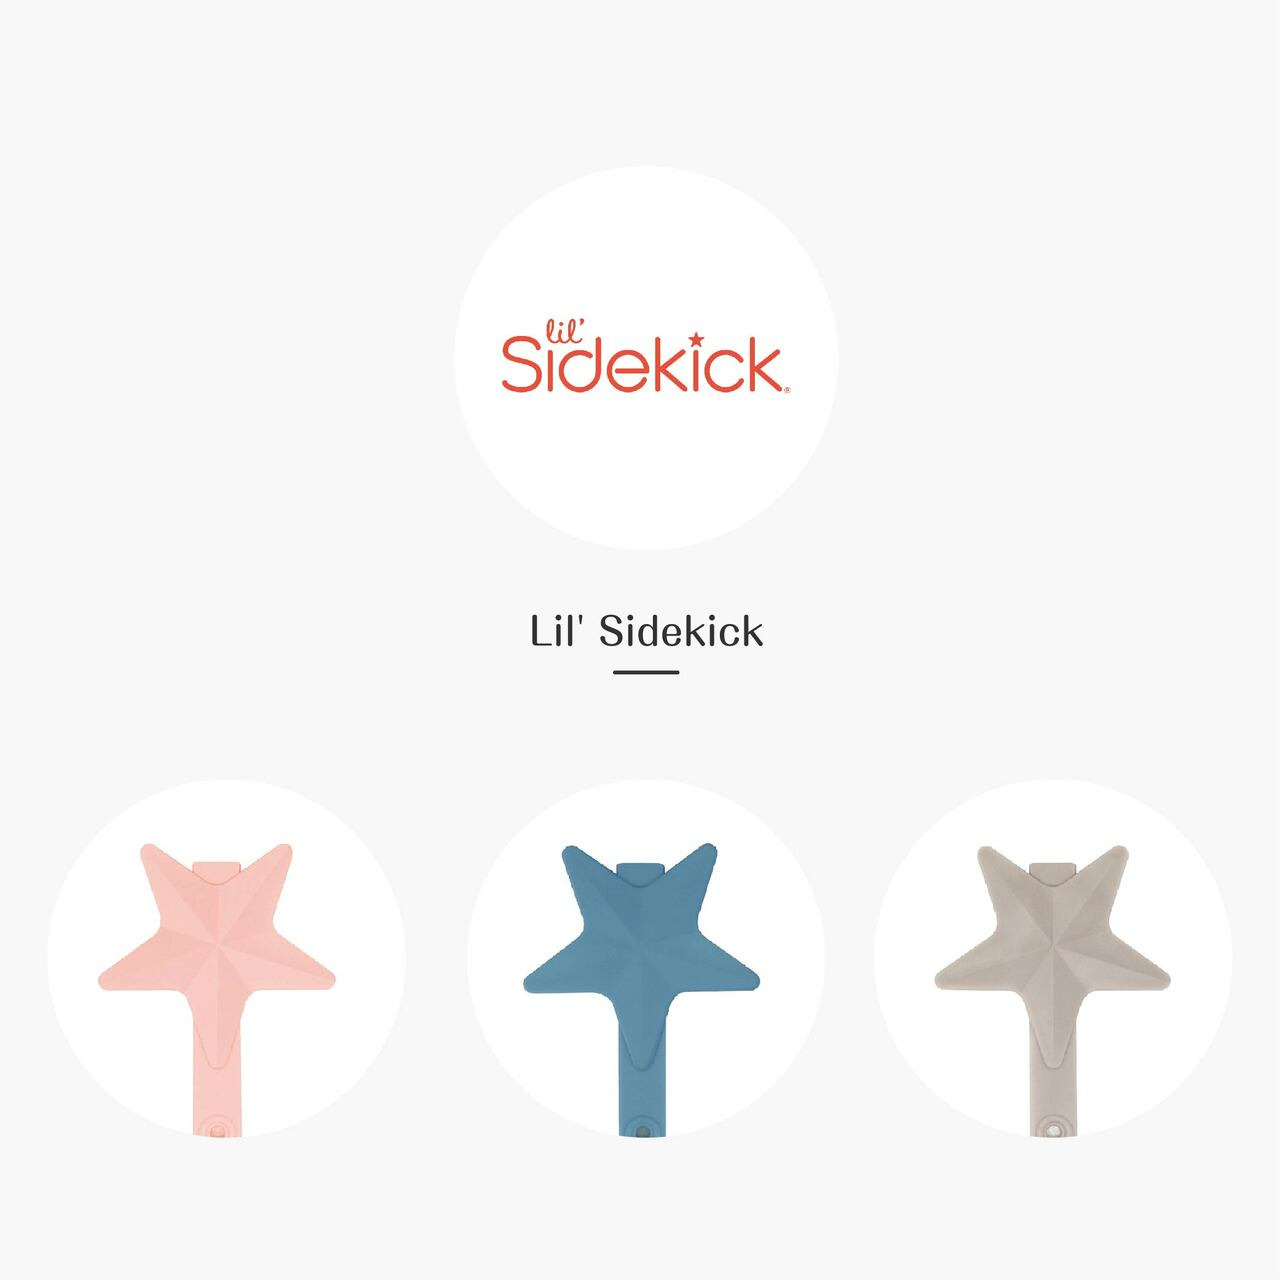 Lil' Sidekick